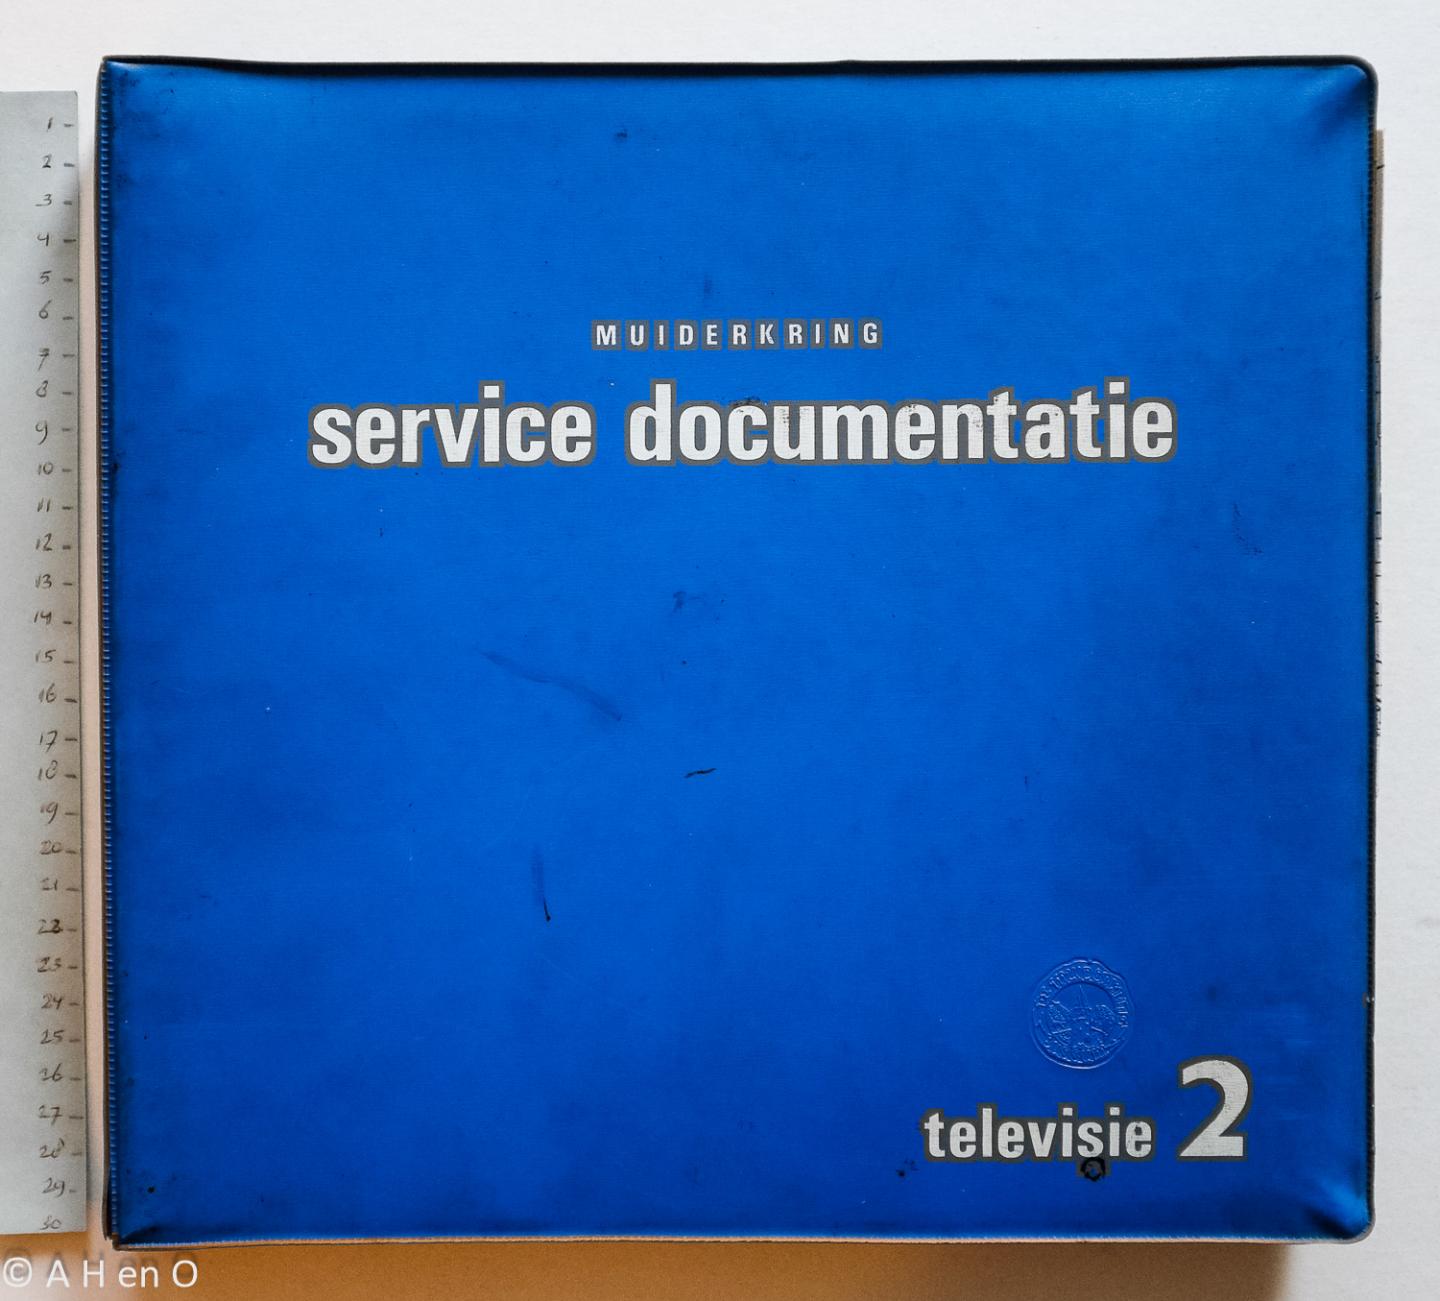  - Service documentatie - Televisie 2 - onder redactie van Radio Bulletin